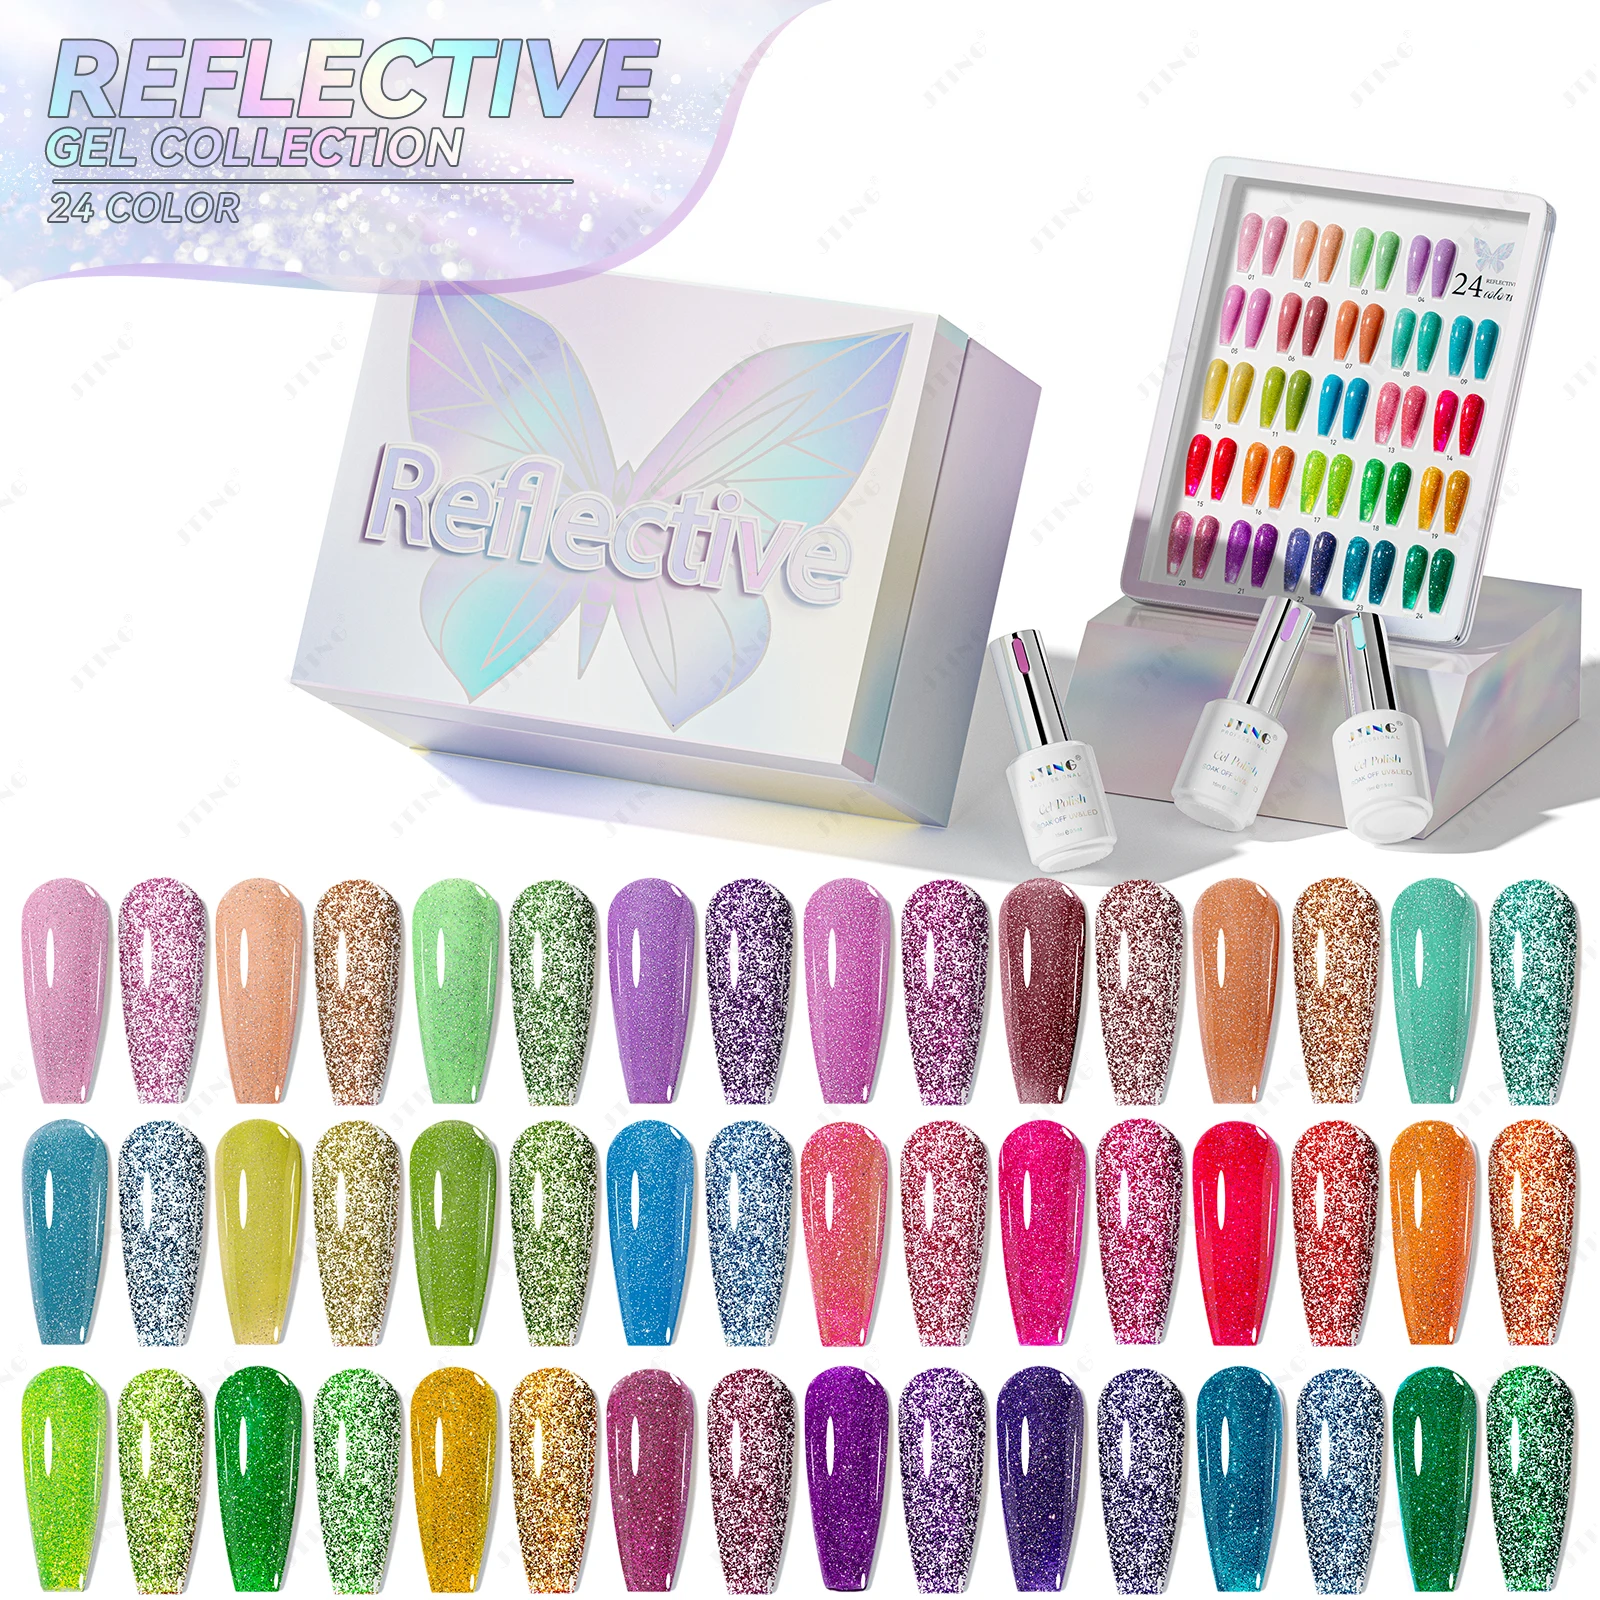 

JTING D14 Infinitely shining disco reflective gel collection box 24colors high effect glitter reflective gel nail polish set